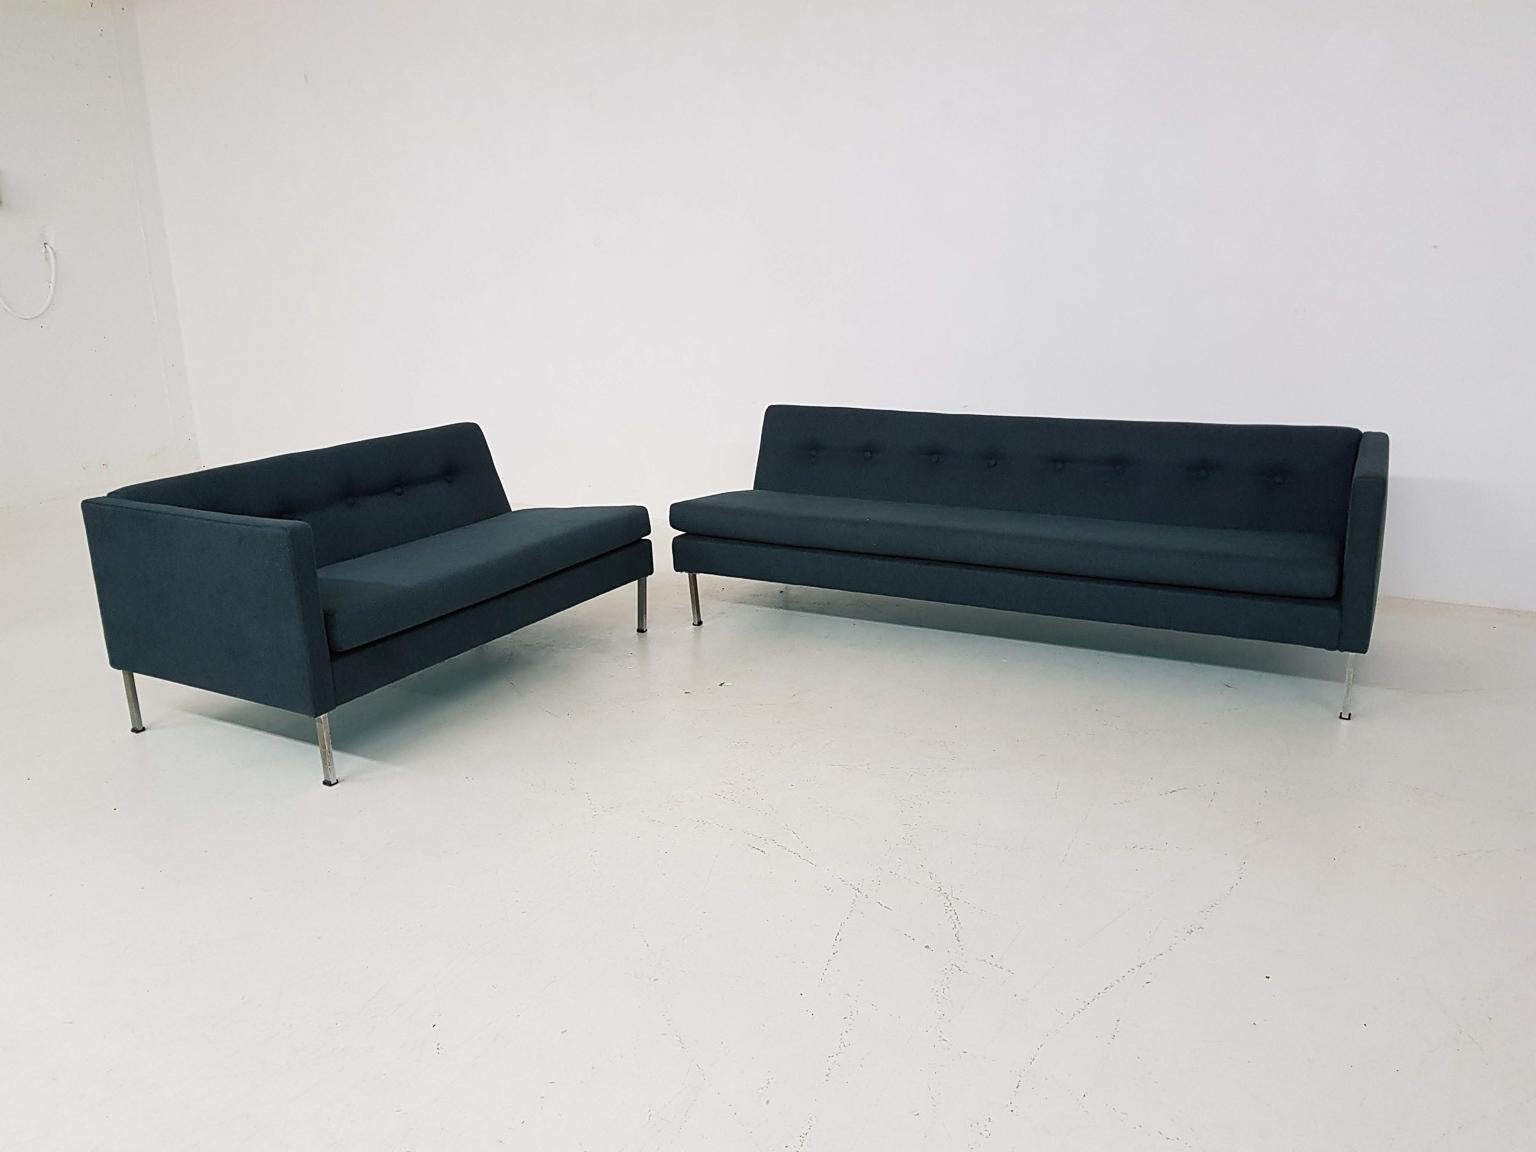 Metal Kho Liang Ie for Artifort Model 680-686 Sofa with Corner Table, Dutch Modern 60s